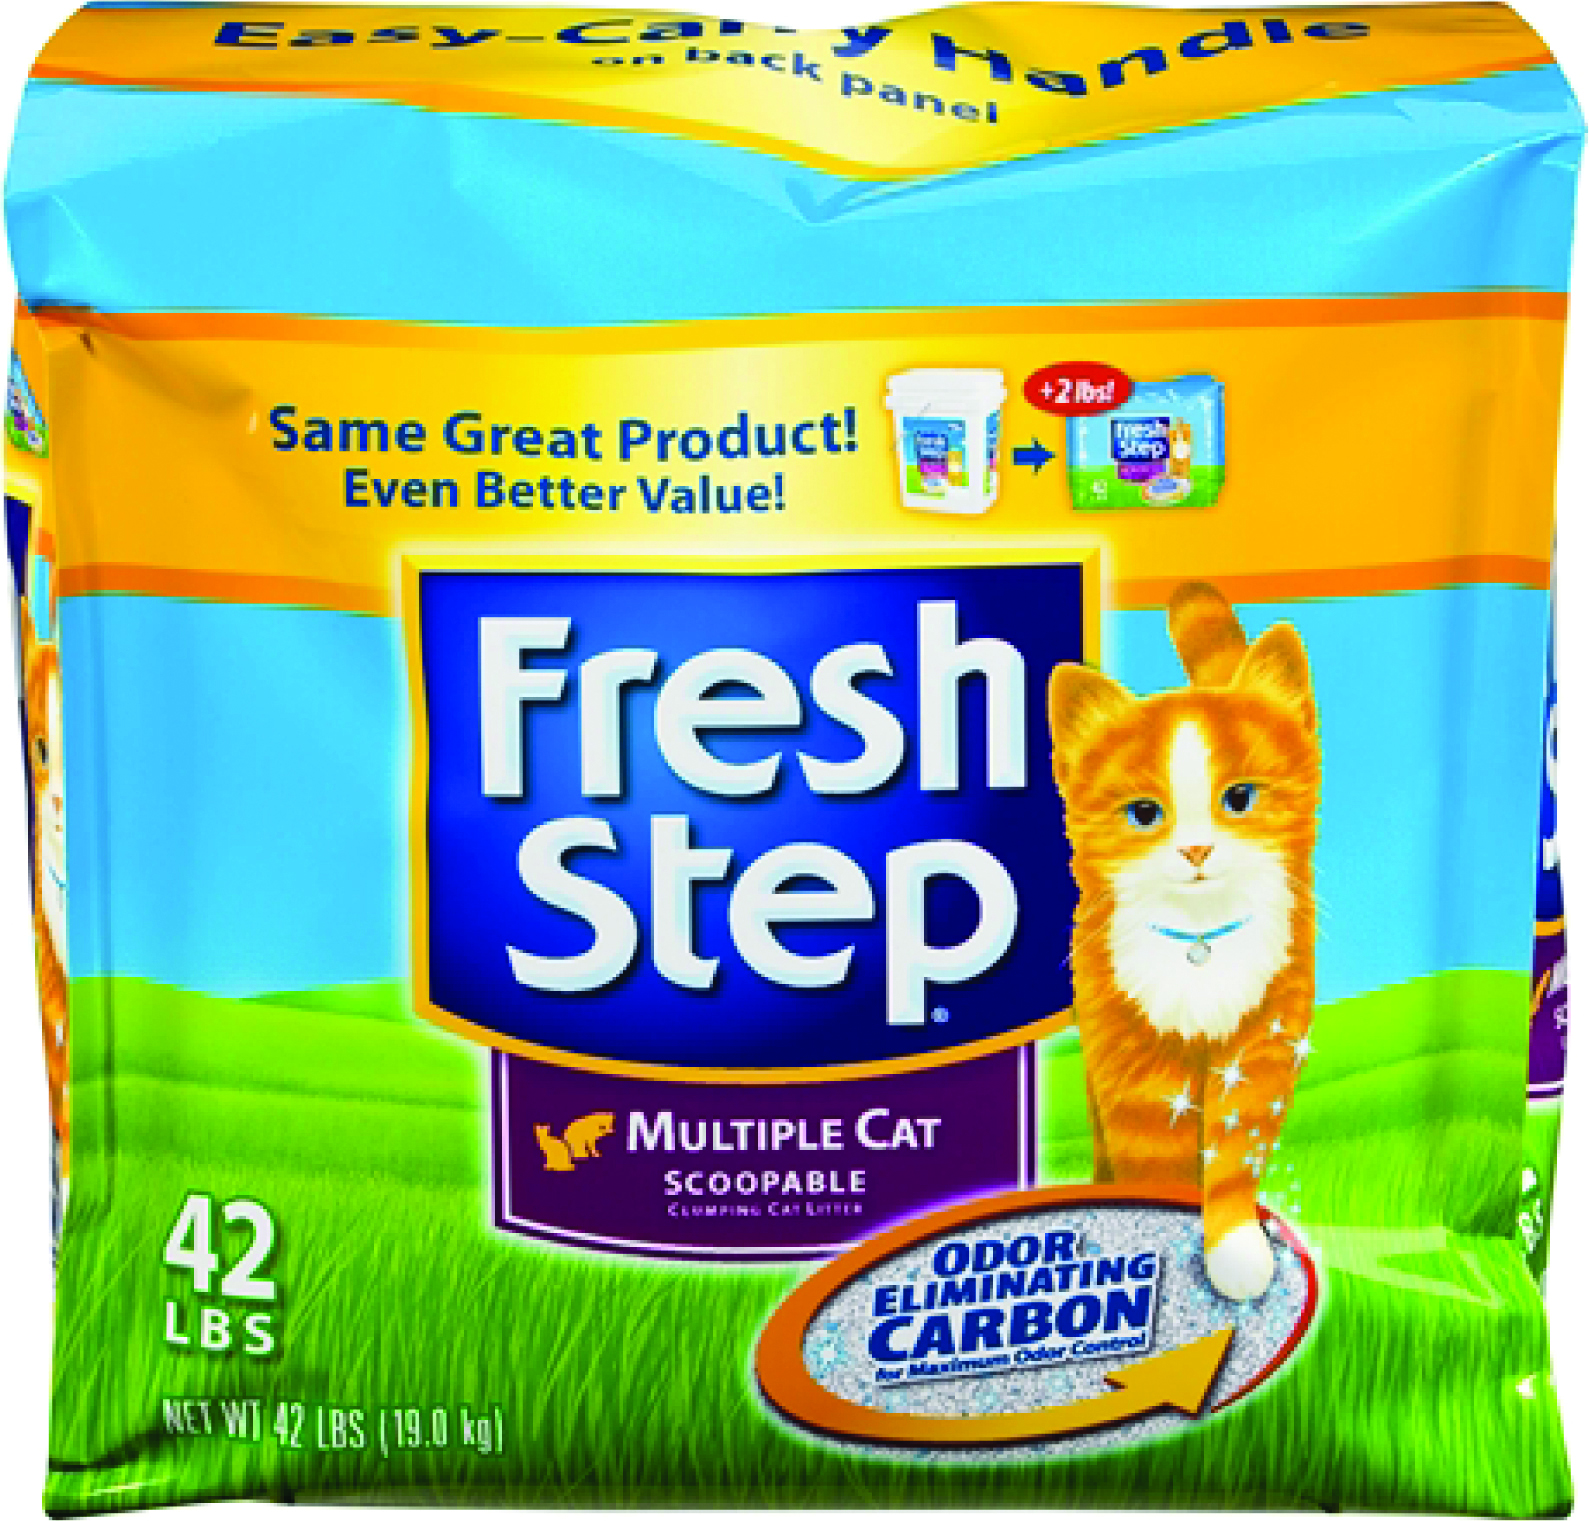 FRESH STEP MULTI-CAT LITTER SCENTED